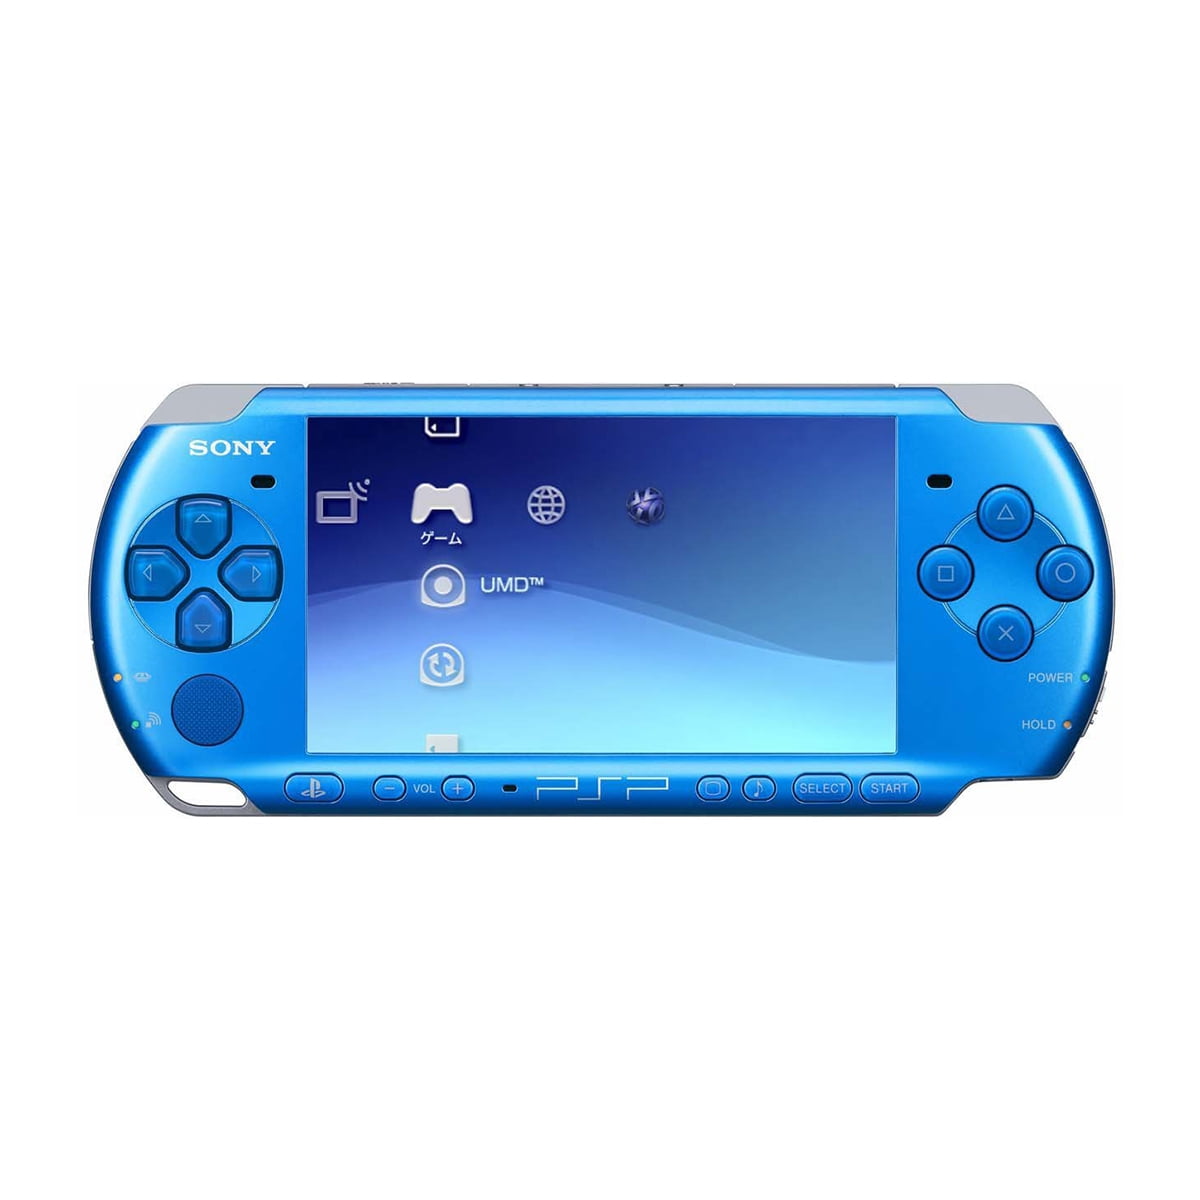 Sony PlayStation Portable (PSP) 3000 Series Handheld Gaming ...